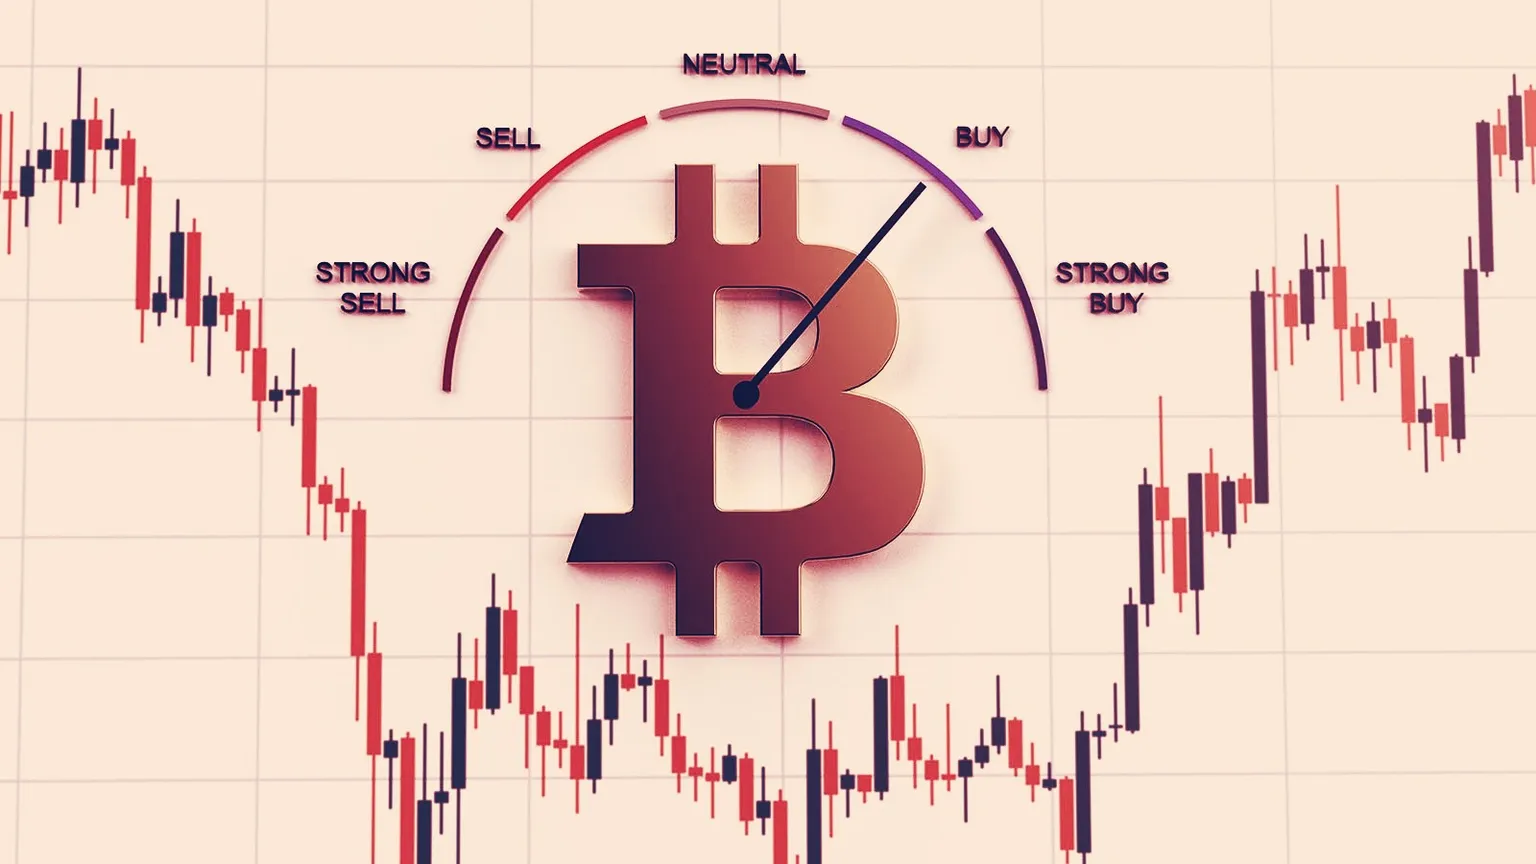 Bitcoin buying sentiment. IMAGE: Shutterstock